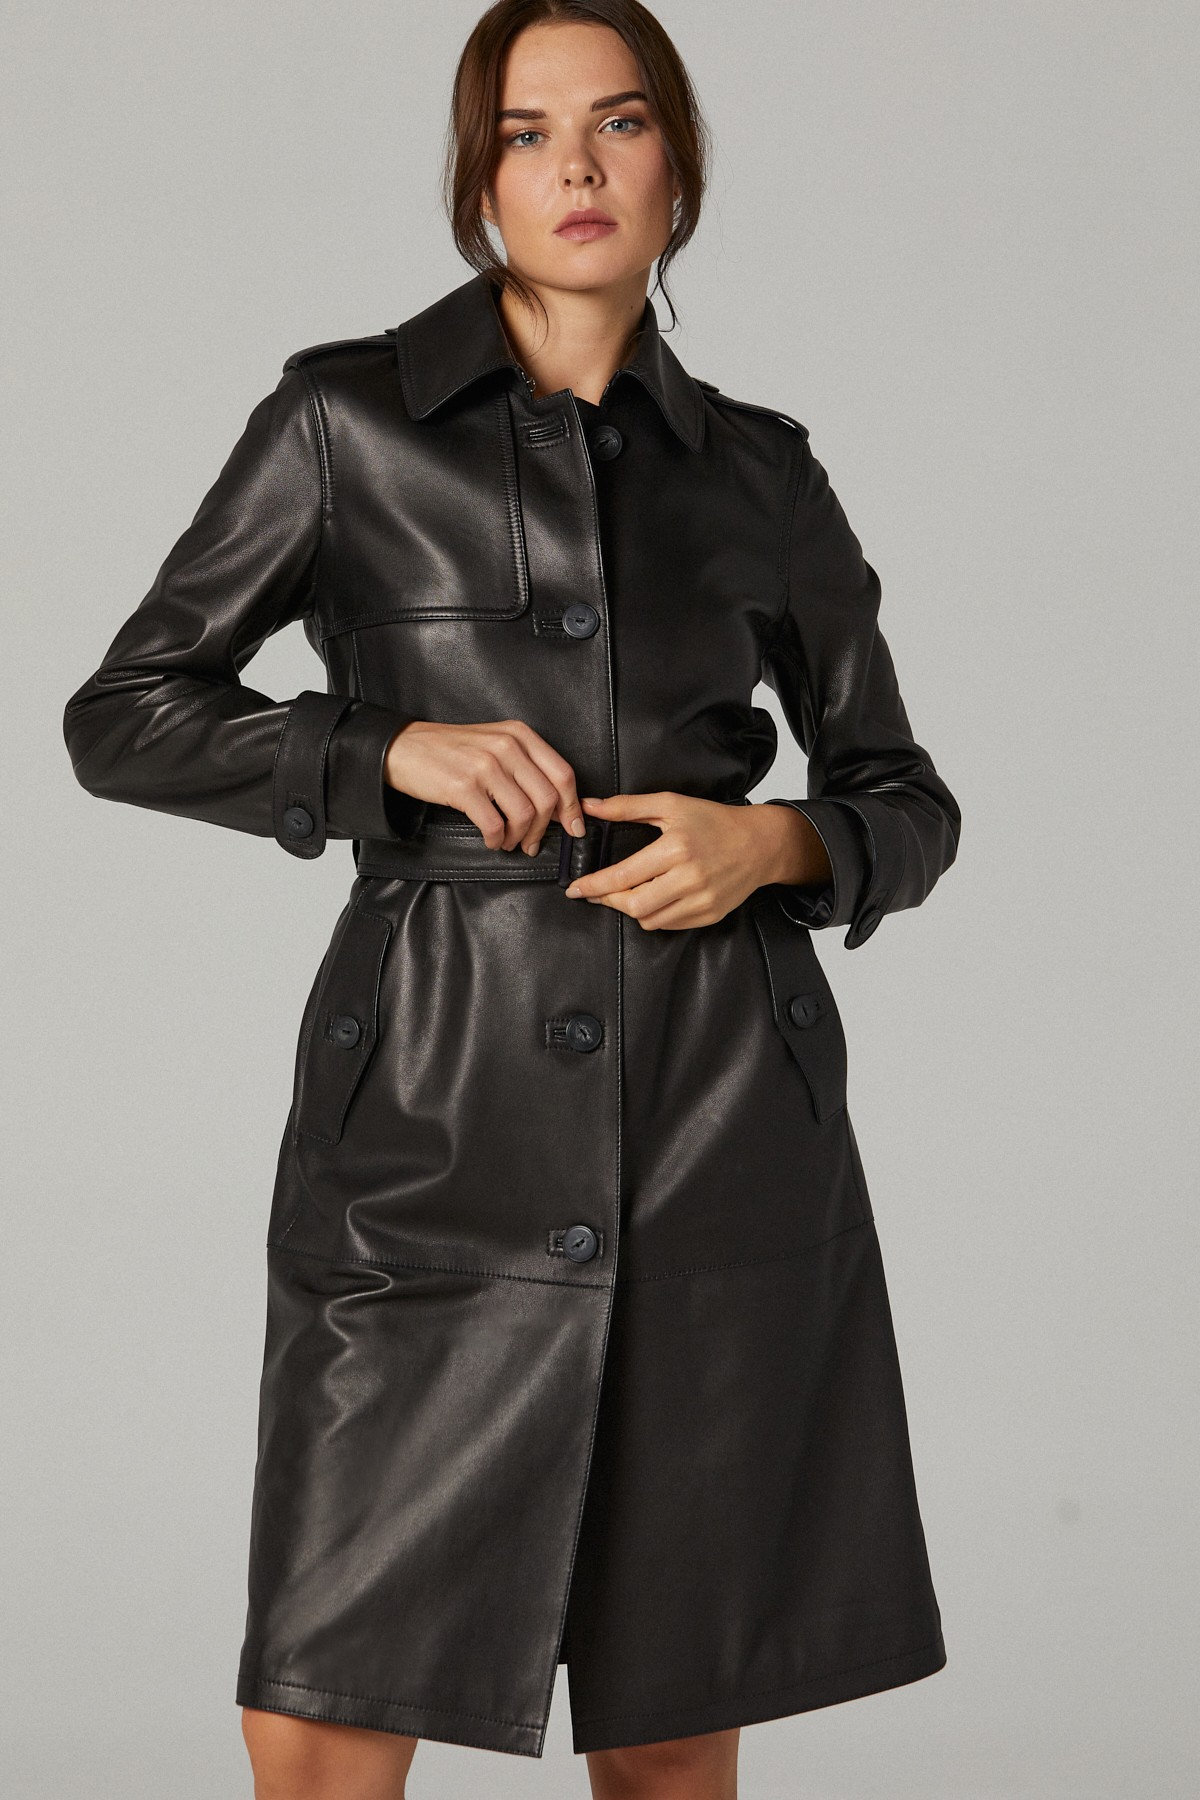 Ladies leather trench coat/ Trench coat women/ Long coat/ | Etsy